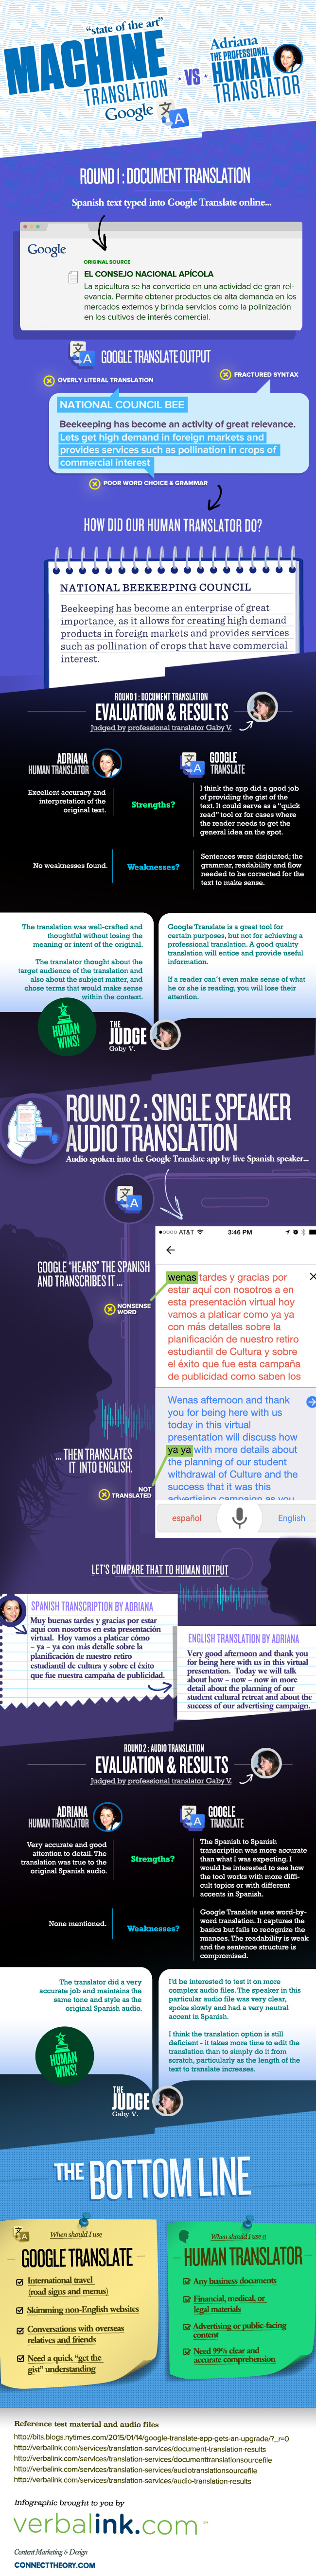 google translation vs human translation 2015 